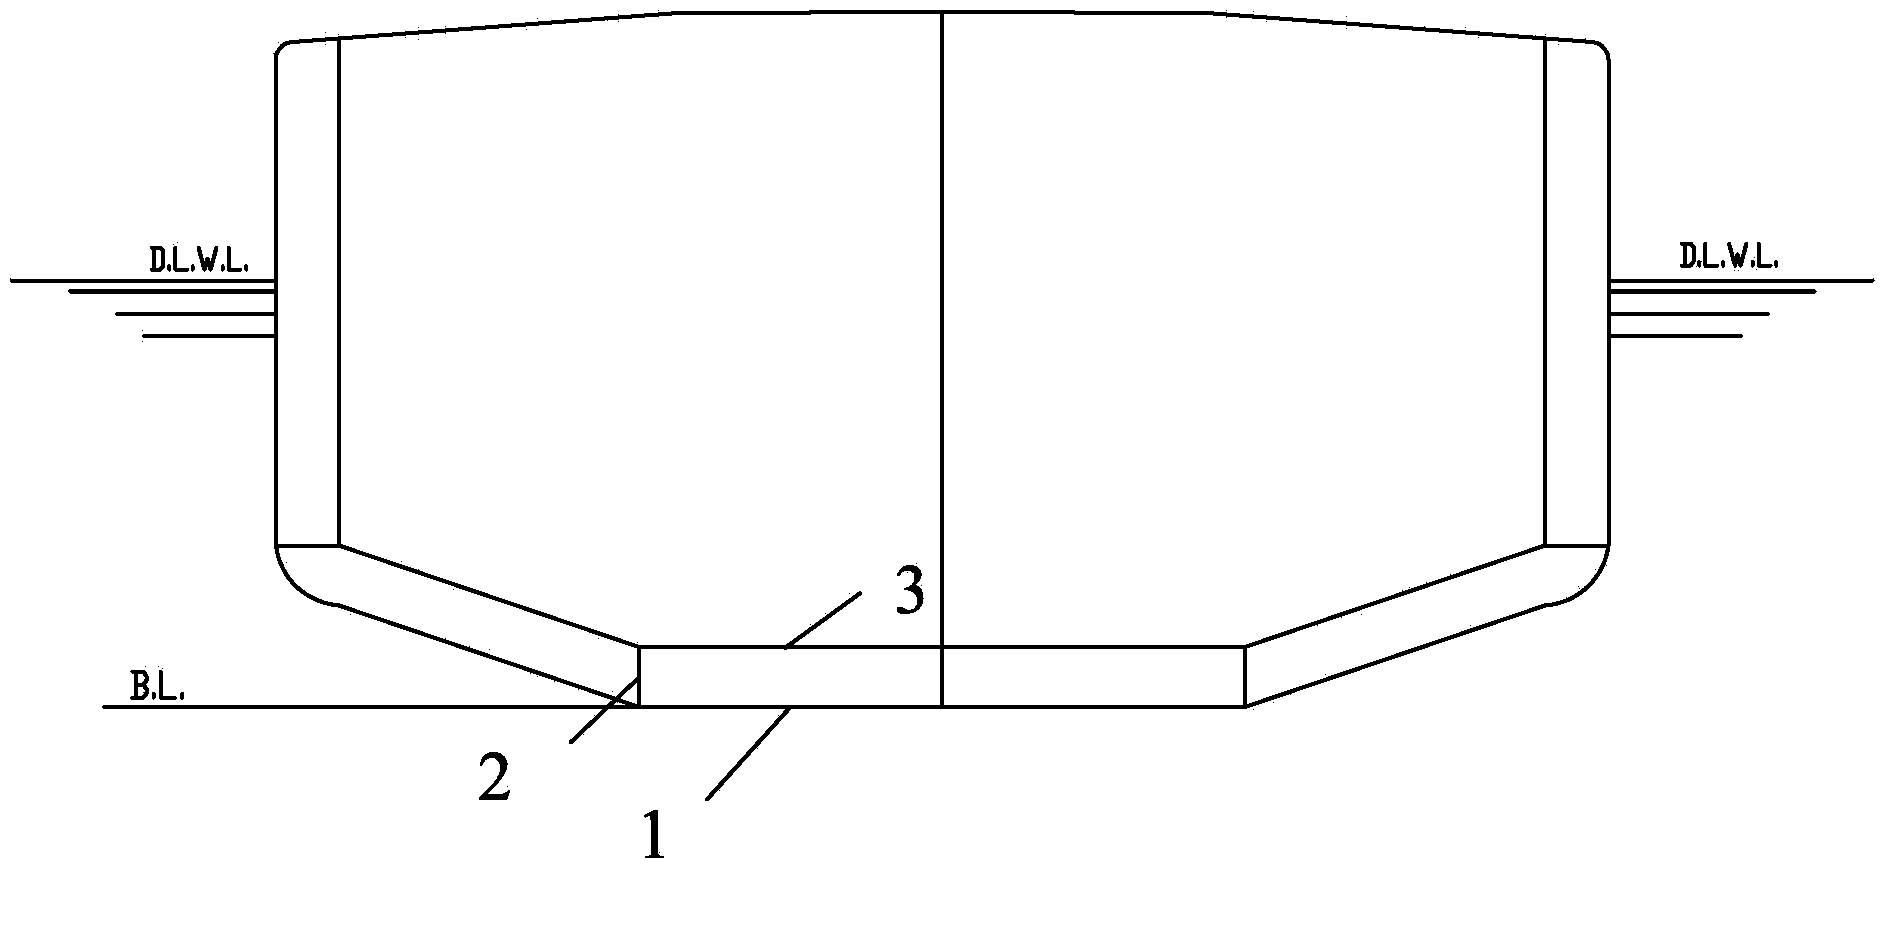 Slanted double-bottom ship based on bevel alignment